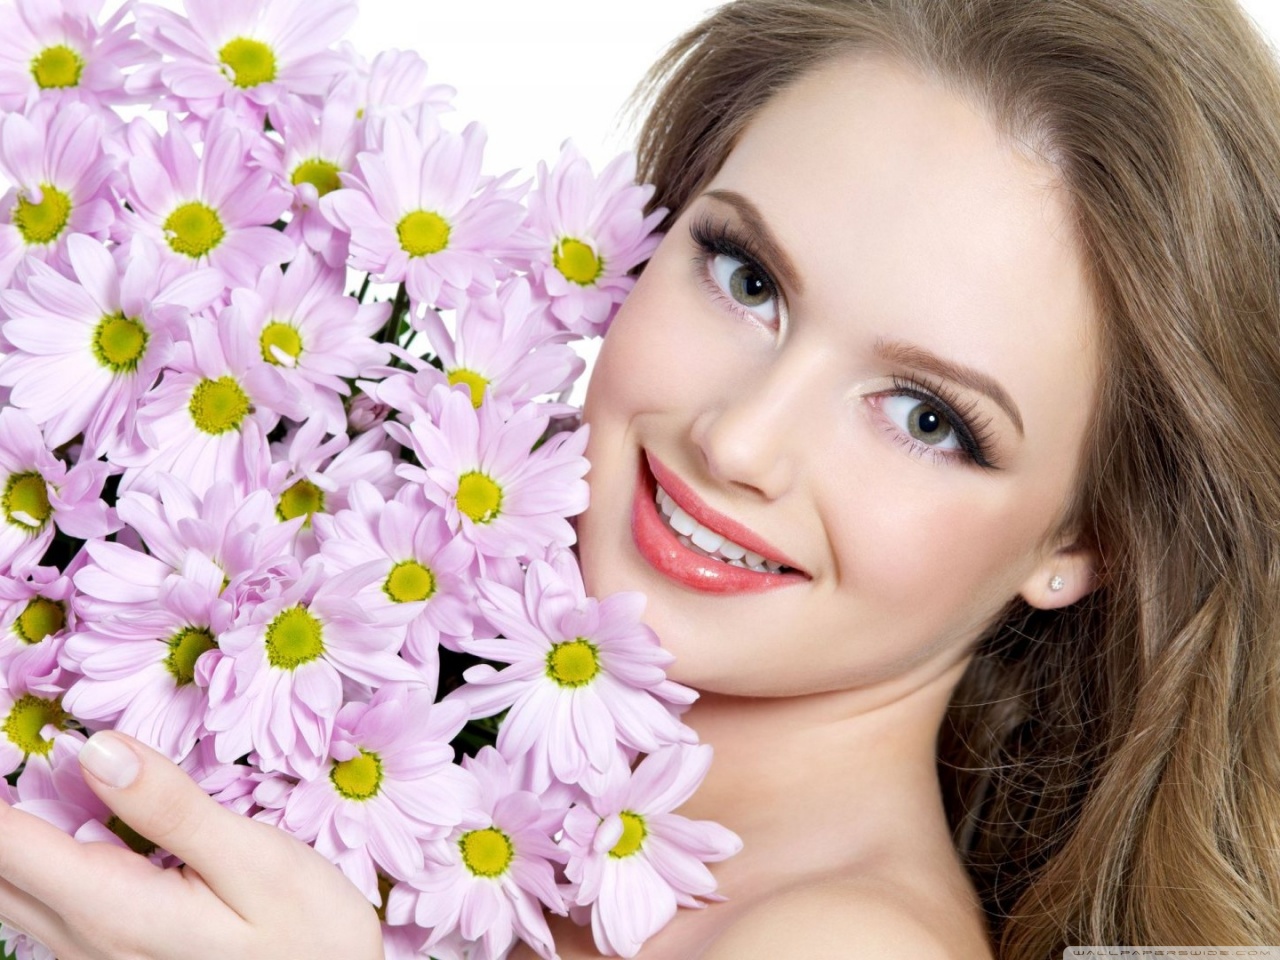 smile girl hd wallpaper,skin,petal,beauty,flower,plant